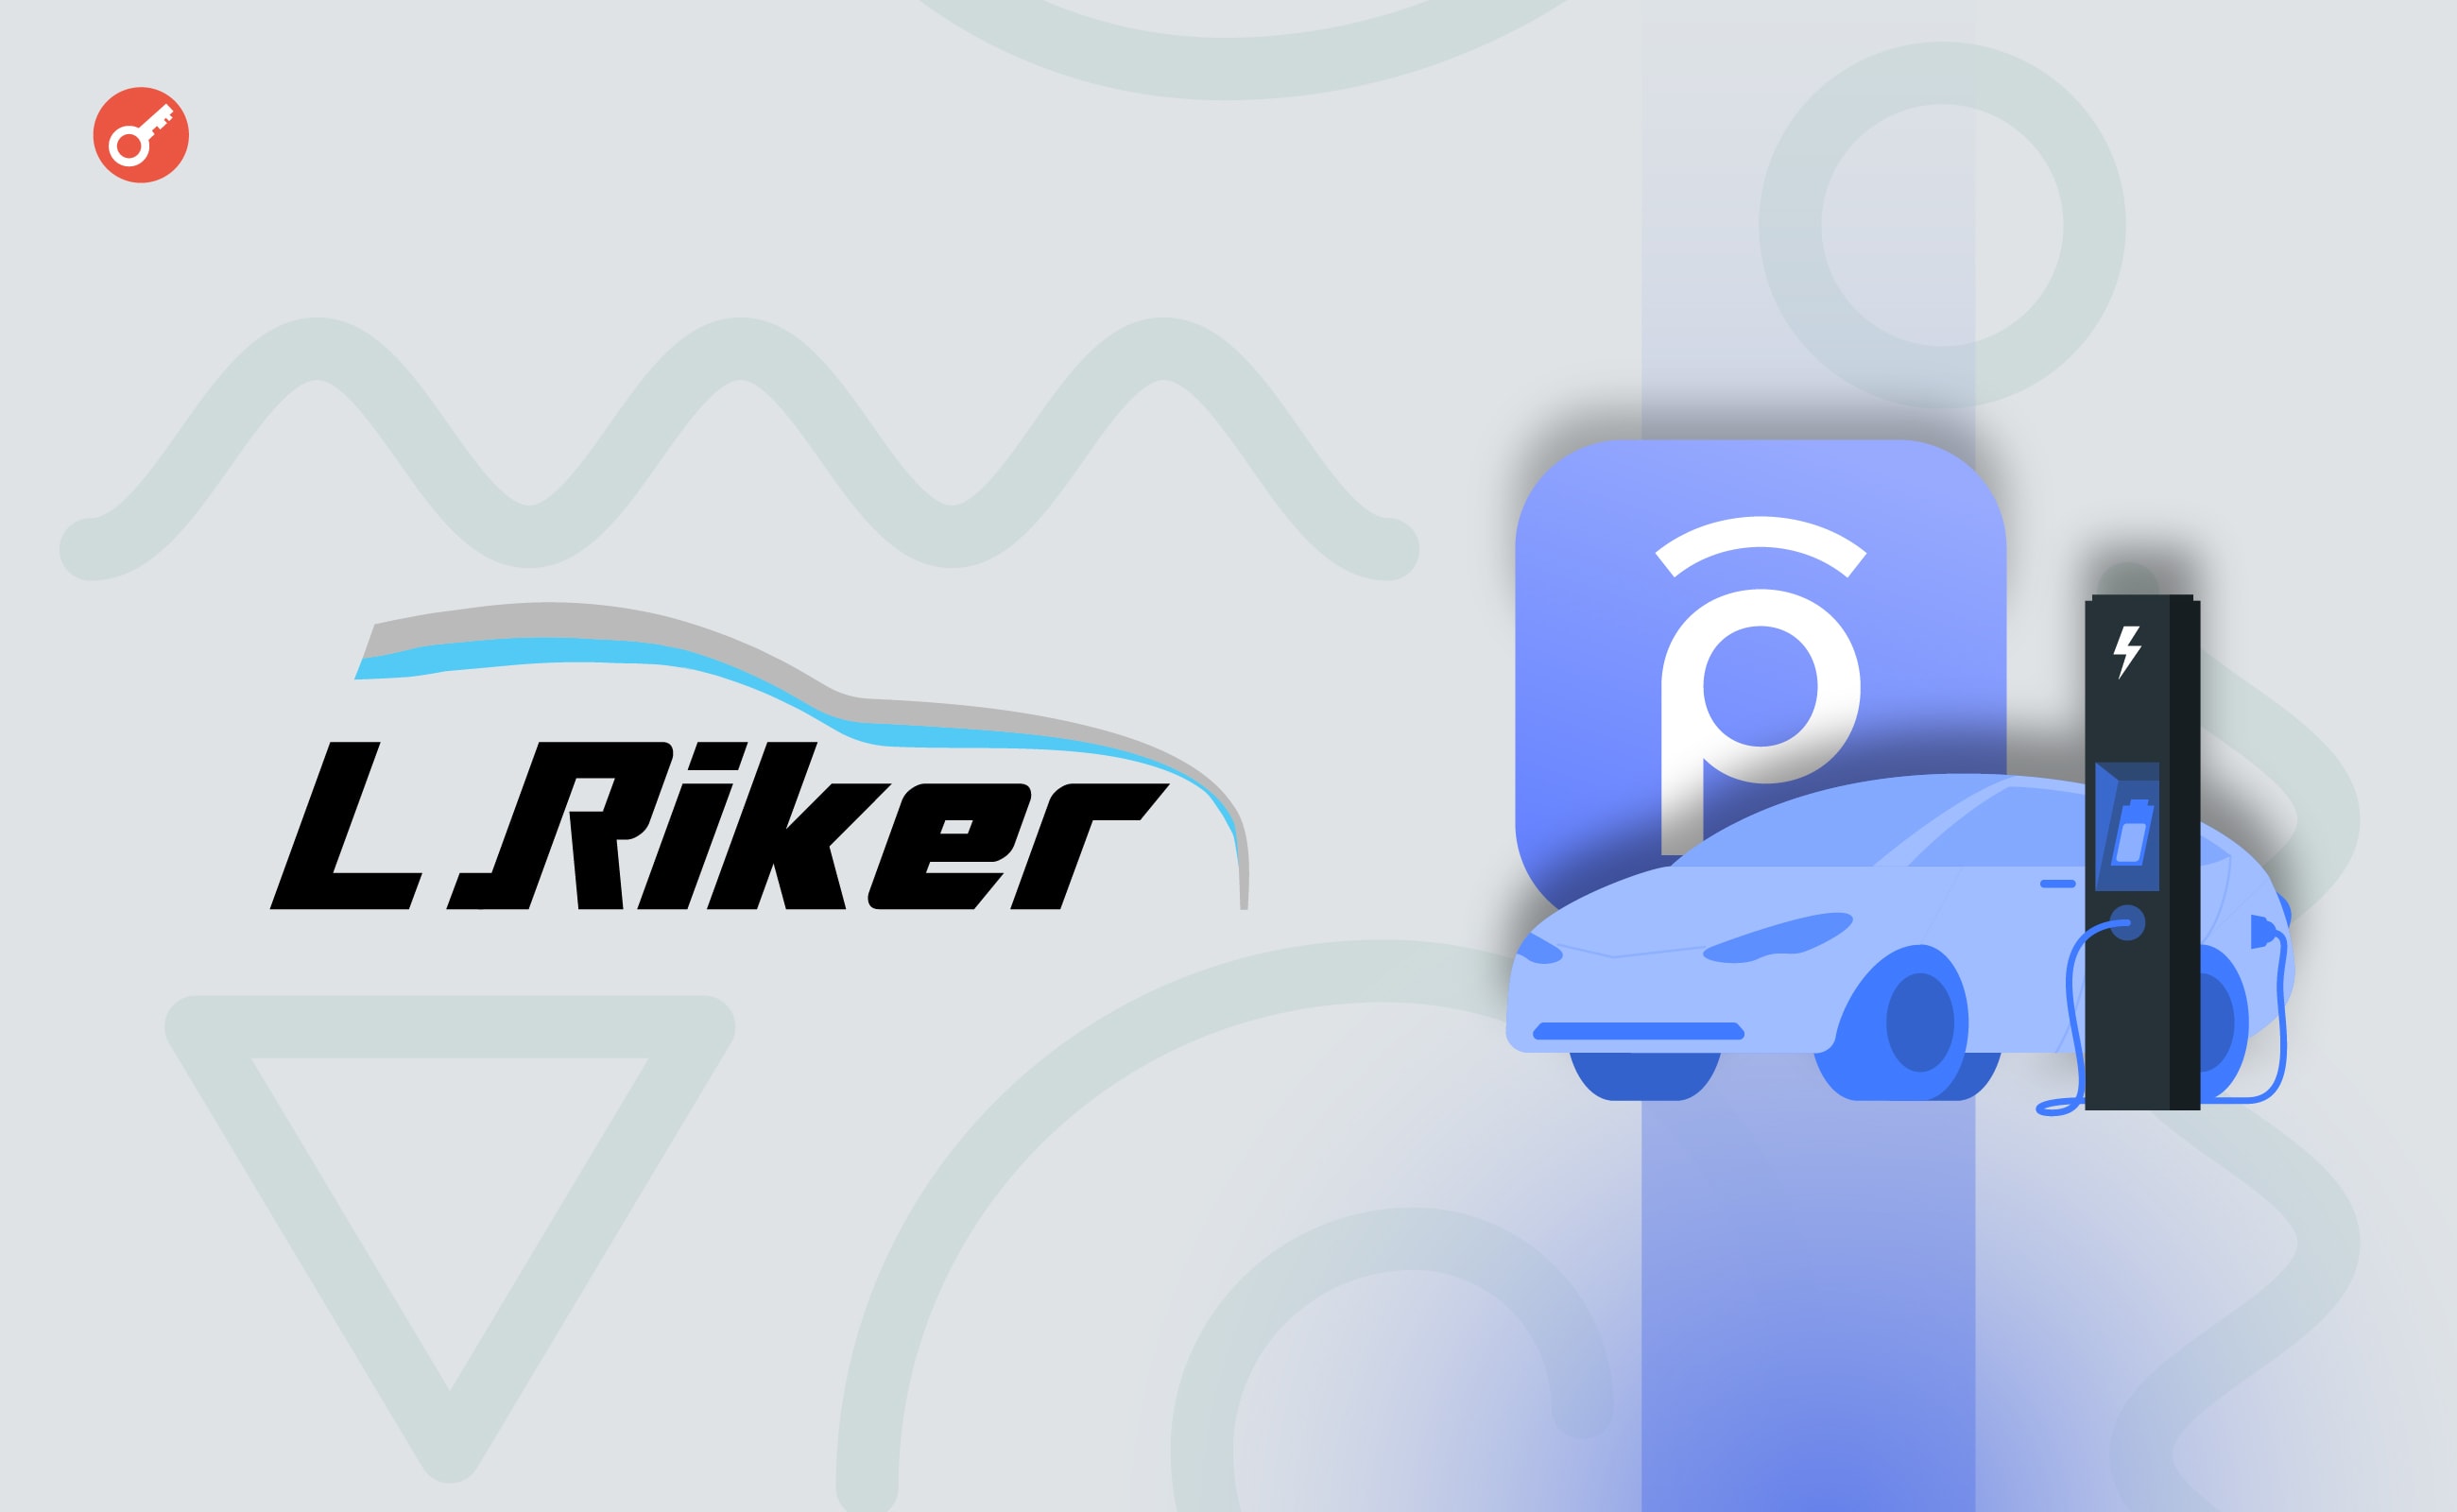 Электрокар за криптовалюту: Whitepay заключила партнерство с Riker. Заглавный коллаж новости.